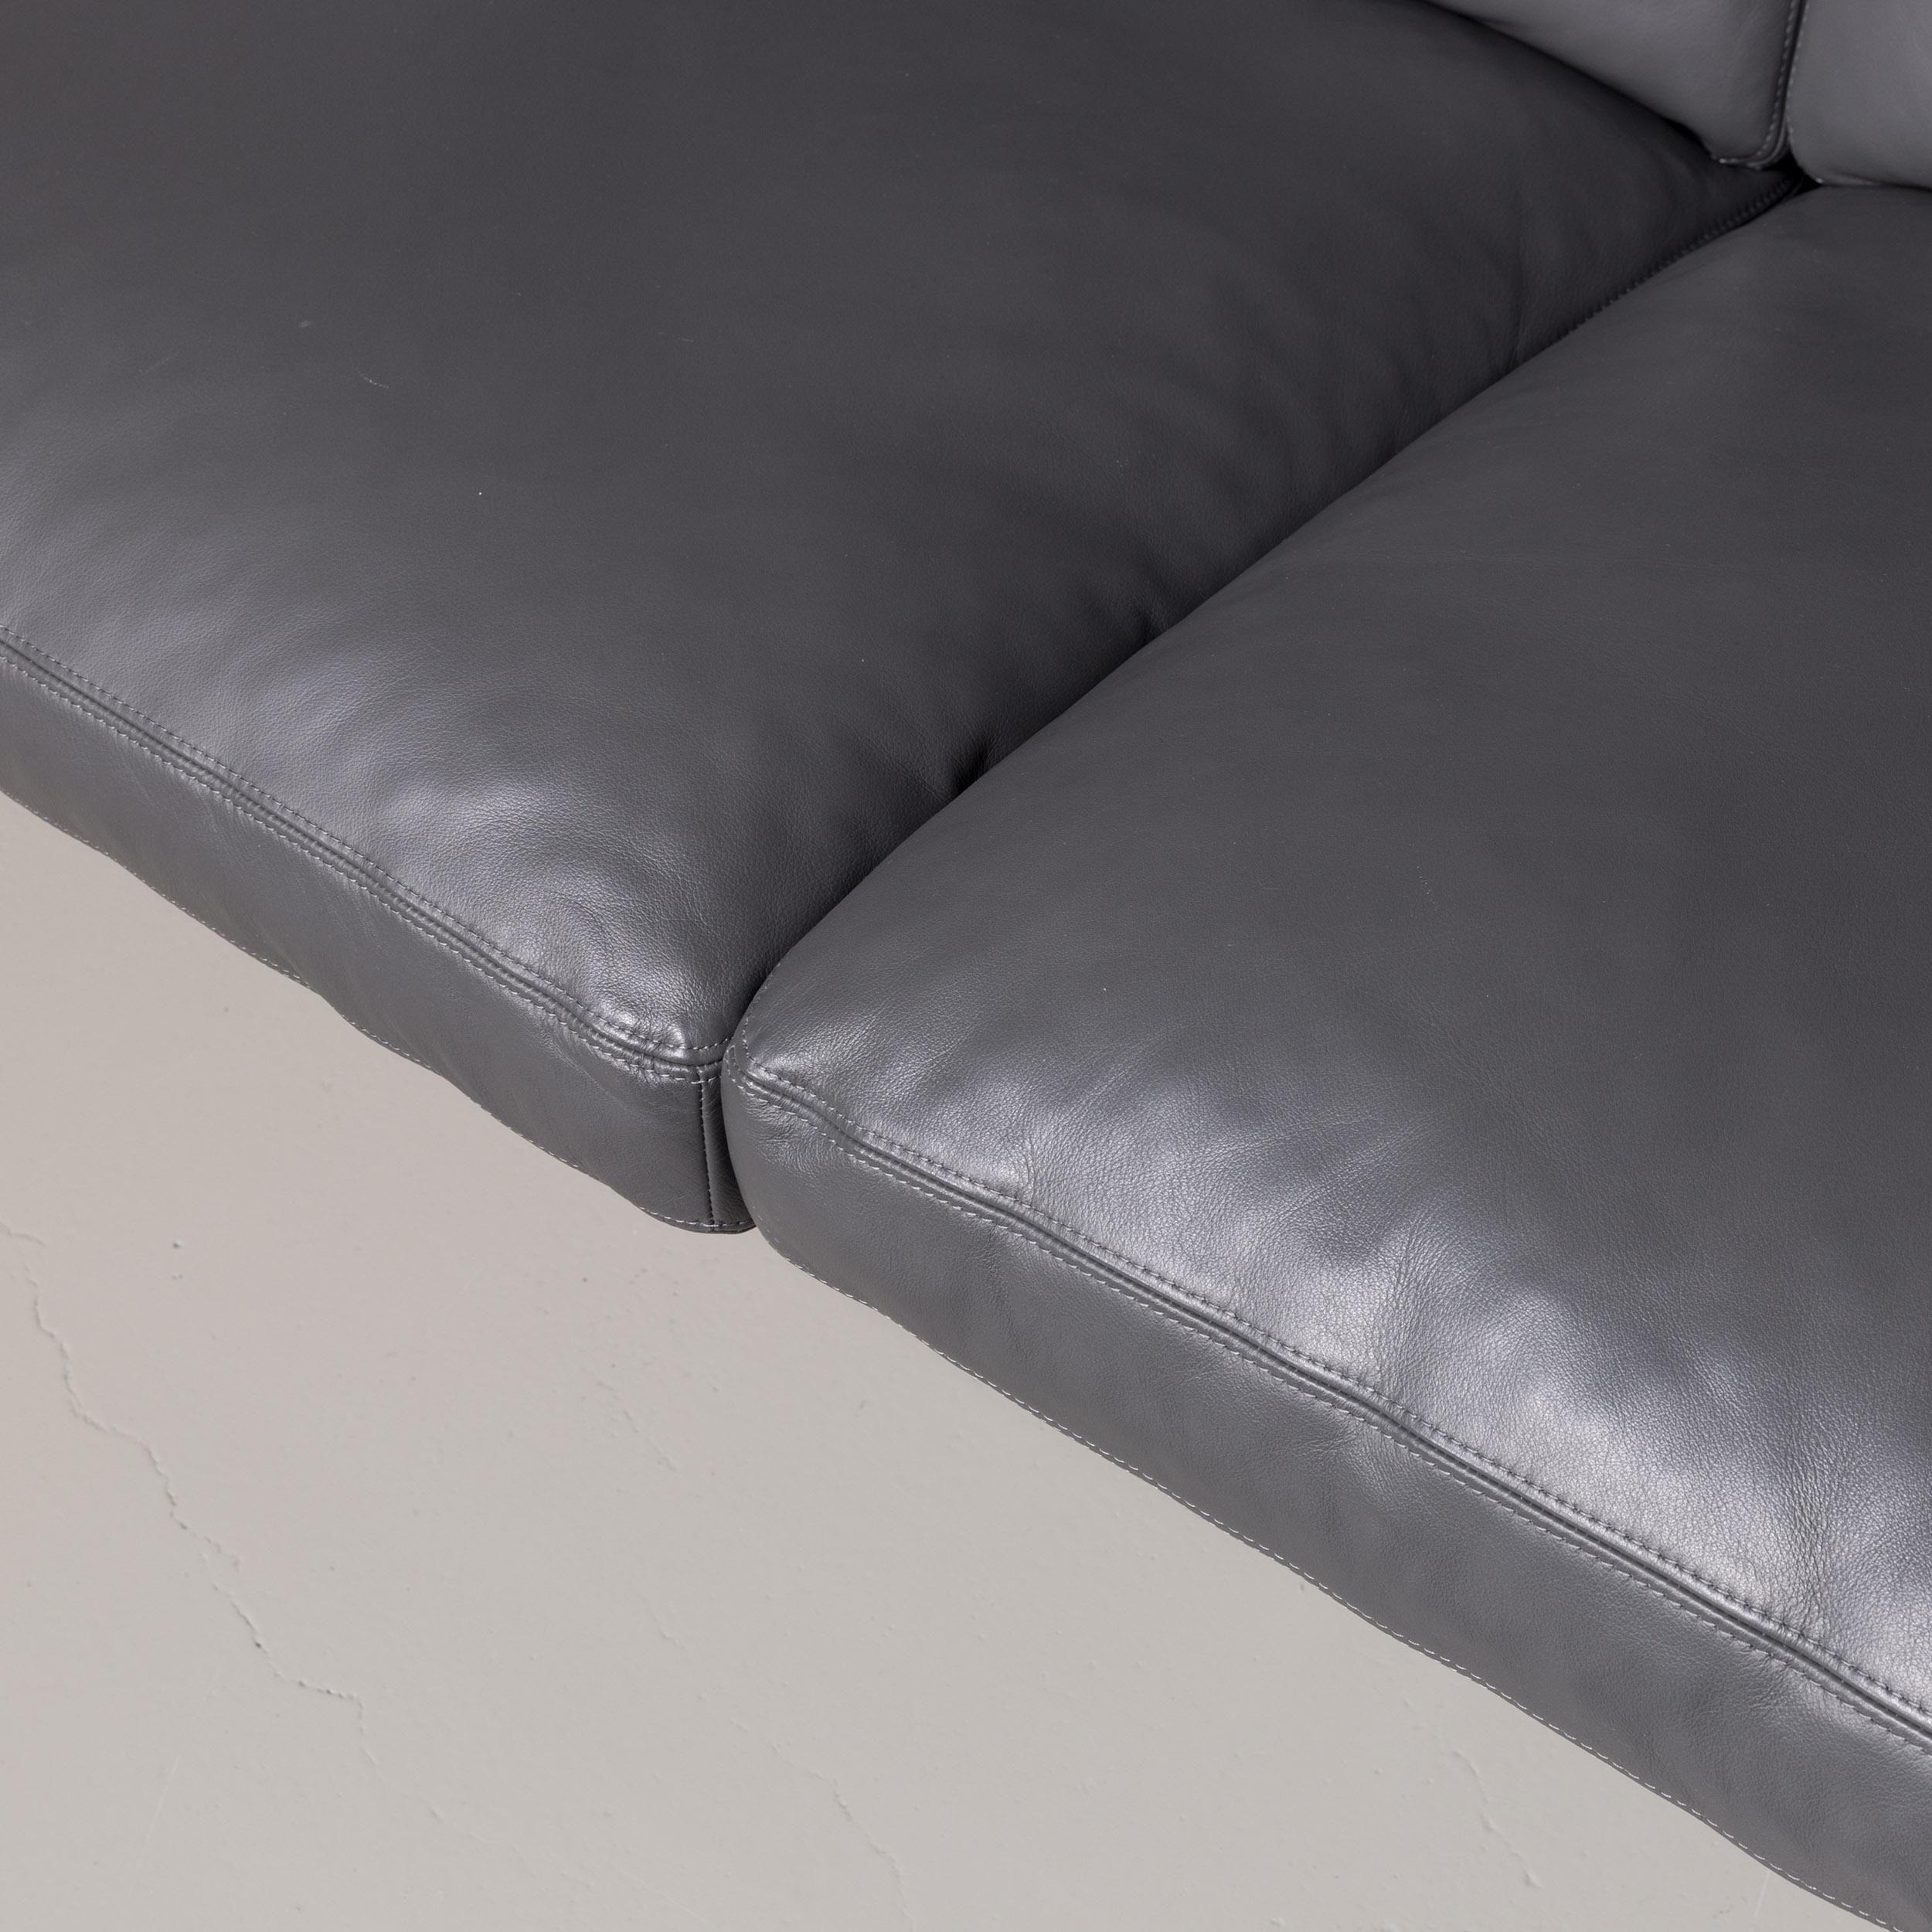 Contemporary Erpo Manhattan Designer Leather Sofa in Anthracite Grey Three-Seat Couch